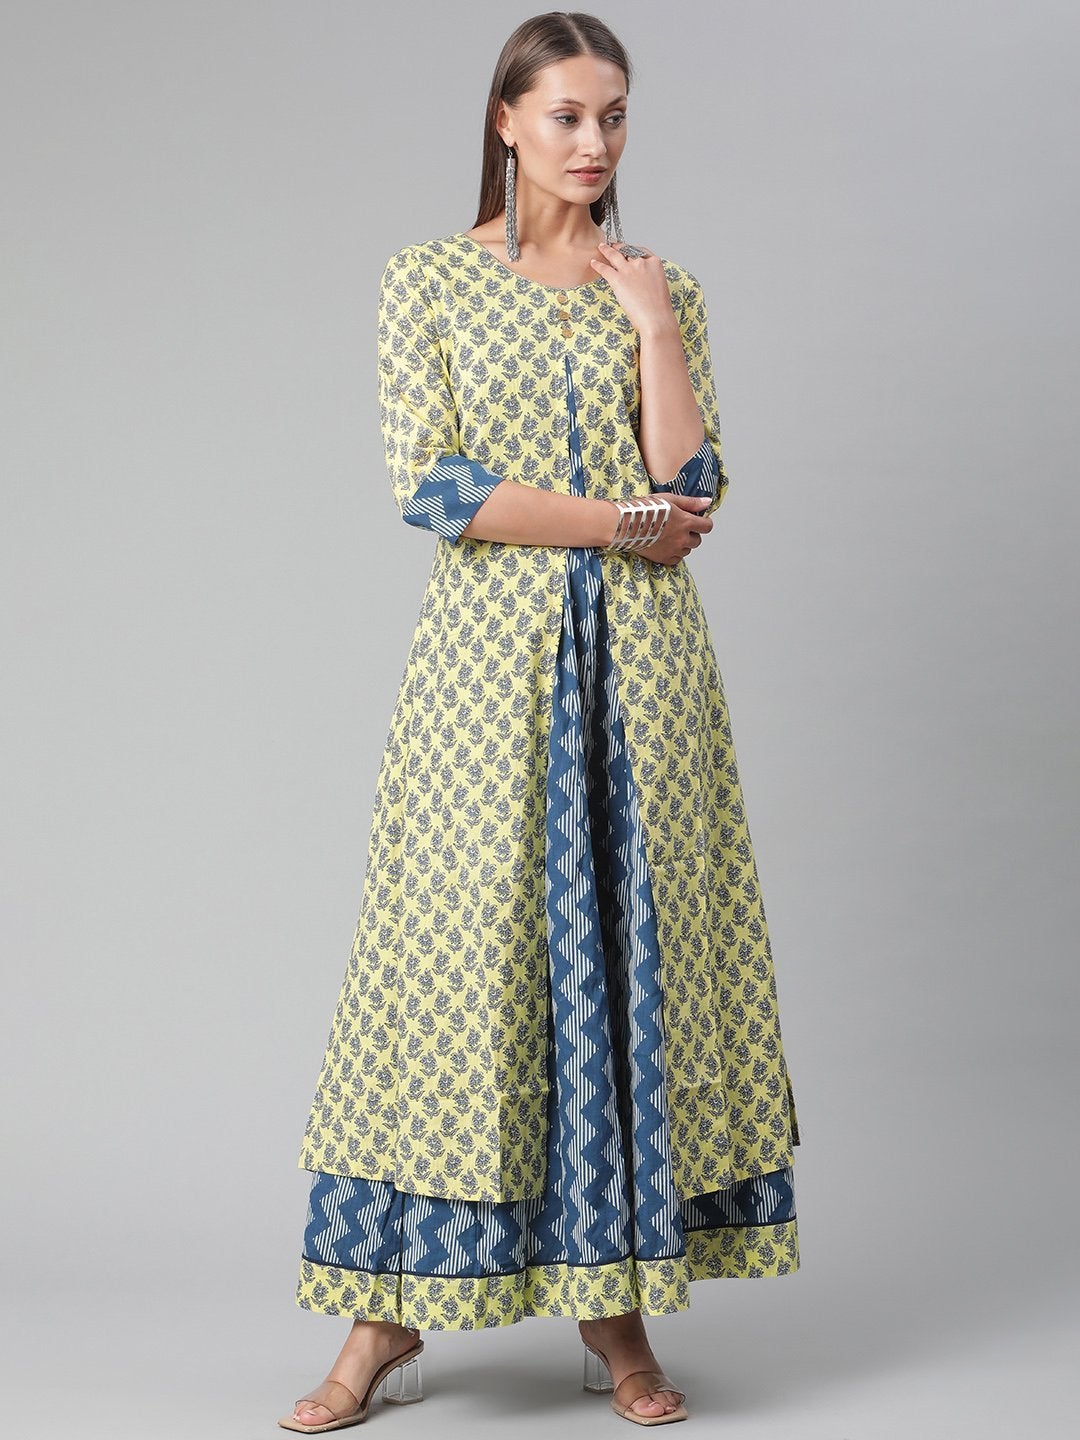 Women's The Dressify Yellow Shurg Style Cotton kurta with Skirt - Divena